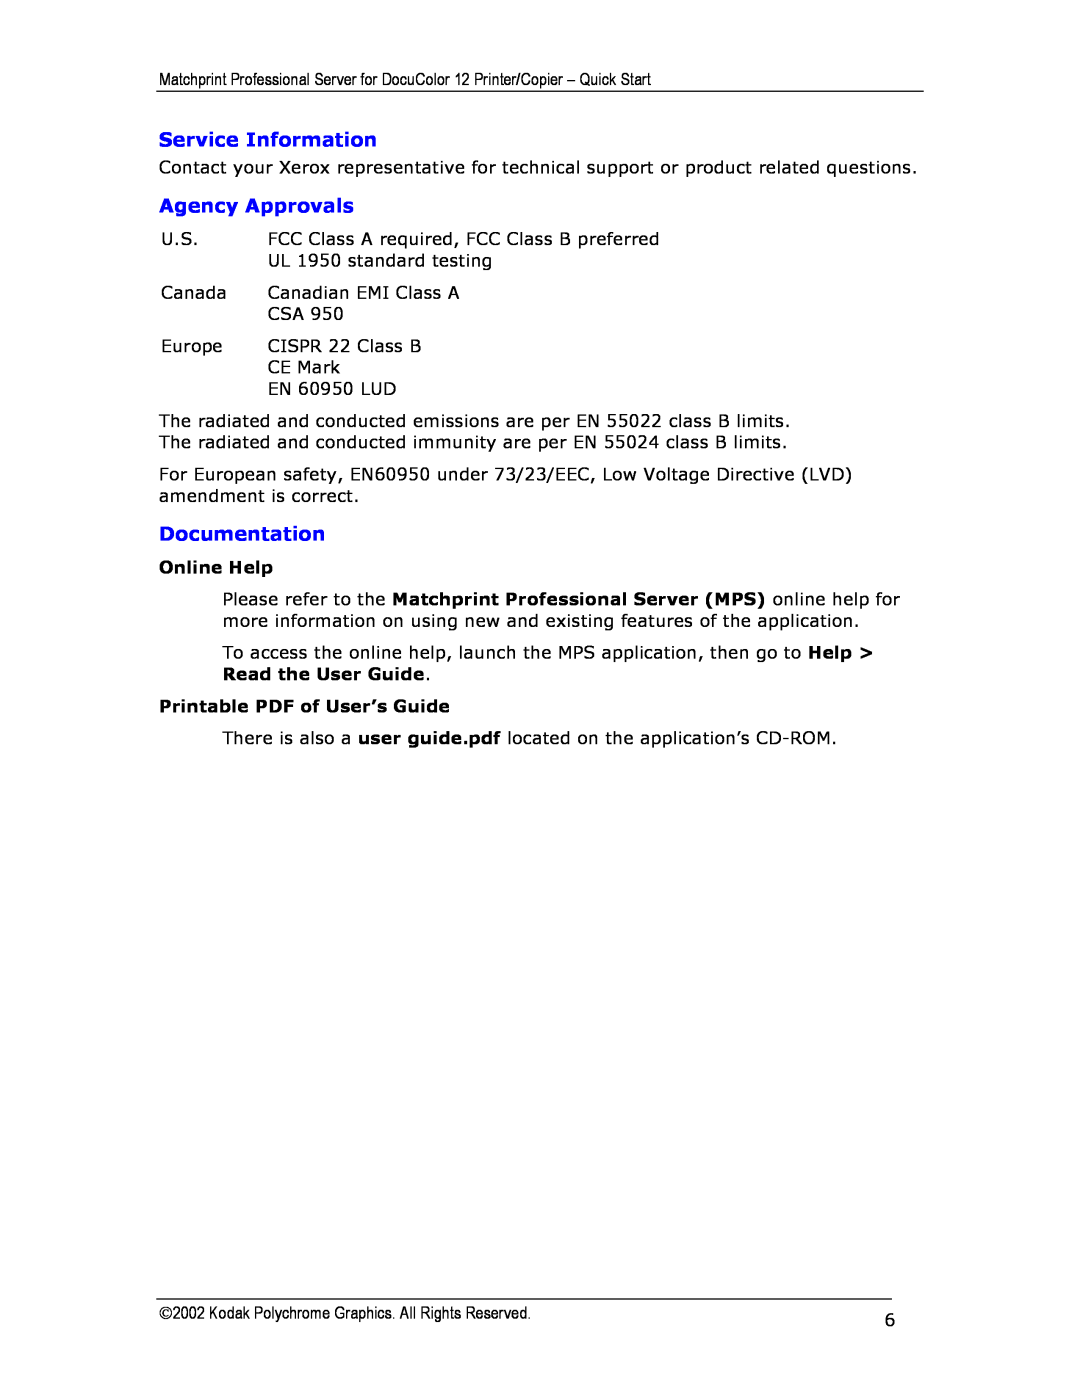 Kodak KY0730485 Service Information, Agency Approvals, Documentation, Online Help, Printable PDF of User’s Guide 